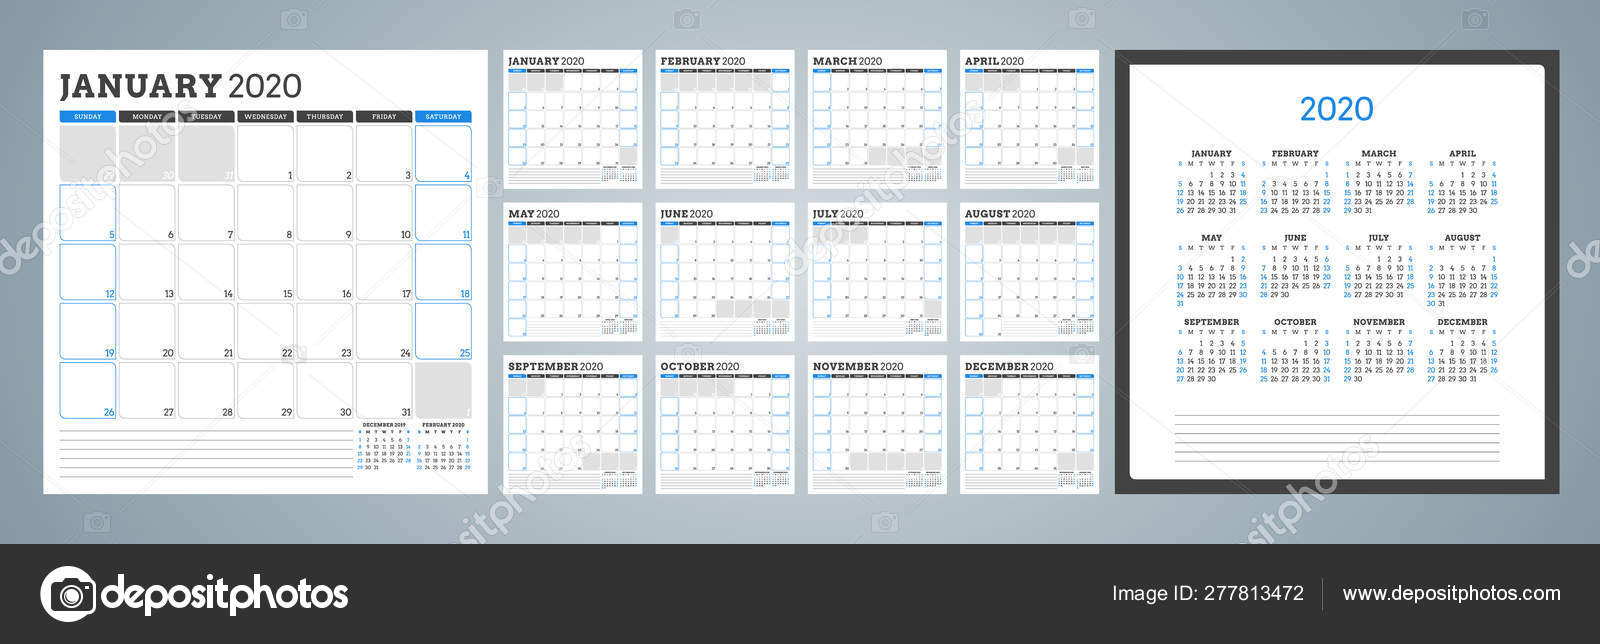 Calendar Planner For 2020 Year. Week Starts On Monday. Set